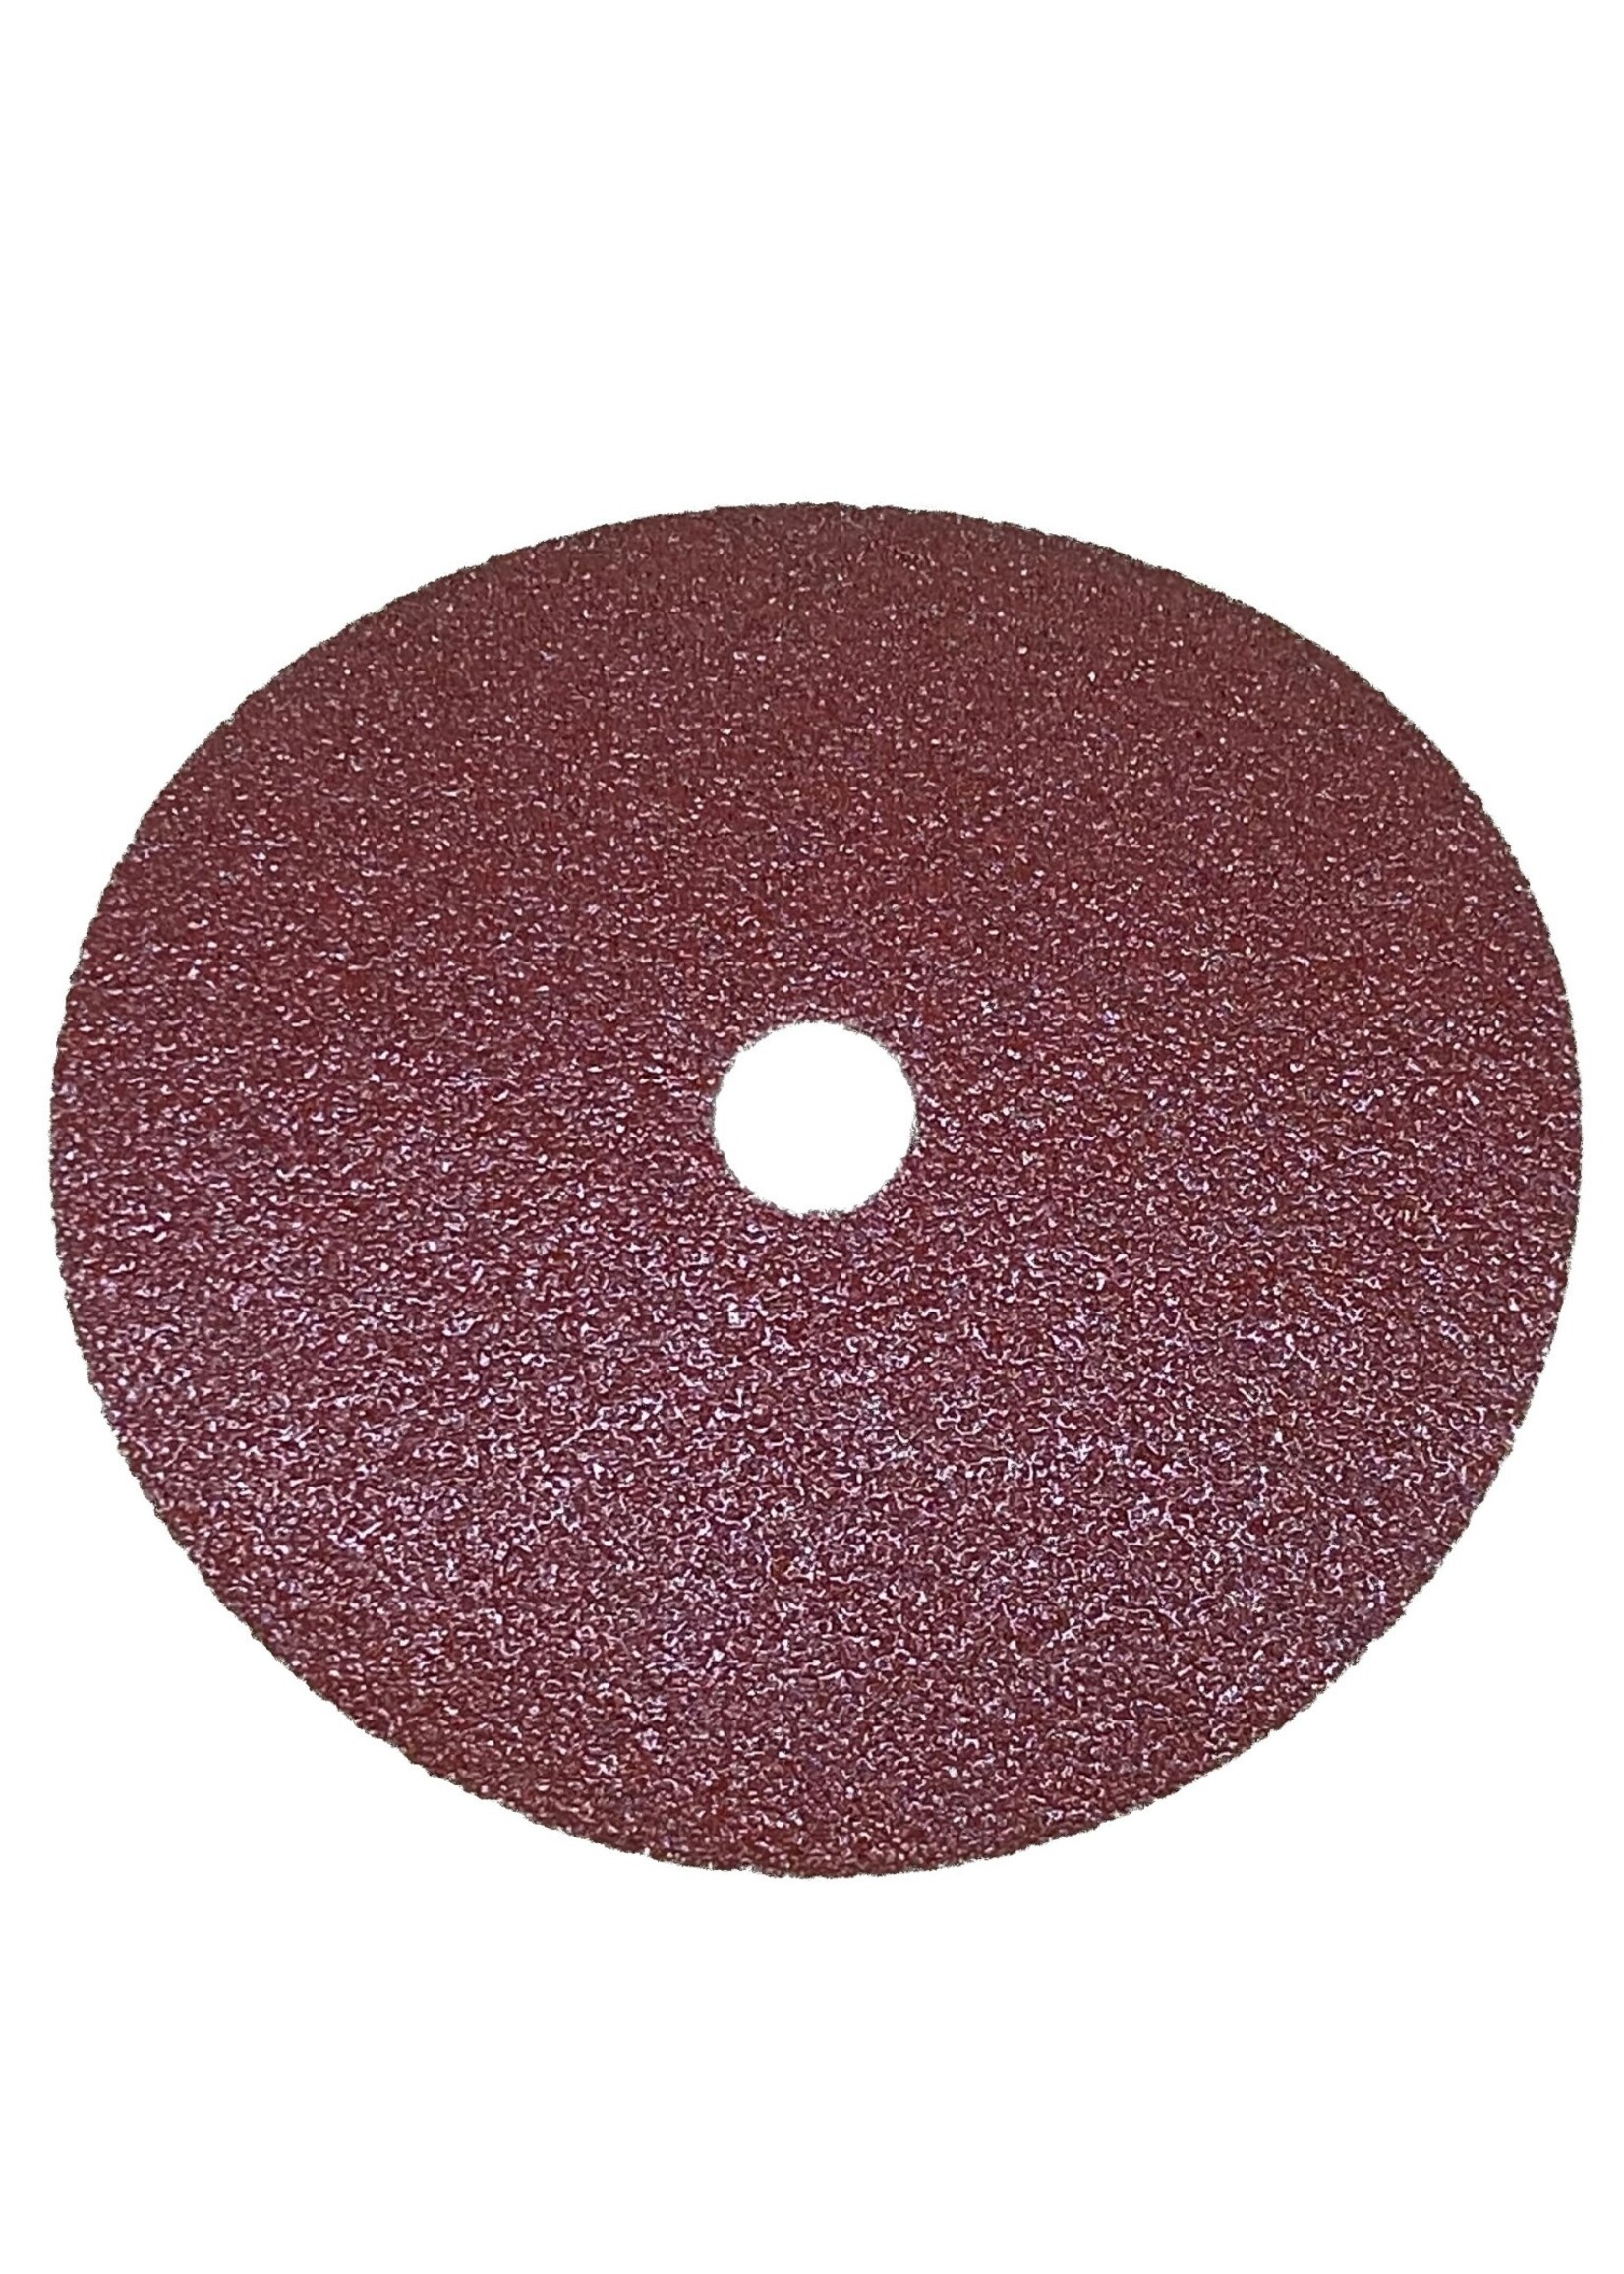 Industrial Abrasives Resin Fibre Disc 7 x 7/8 36 grit